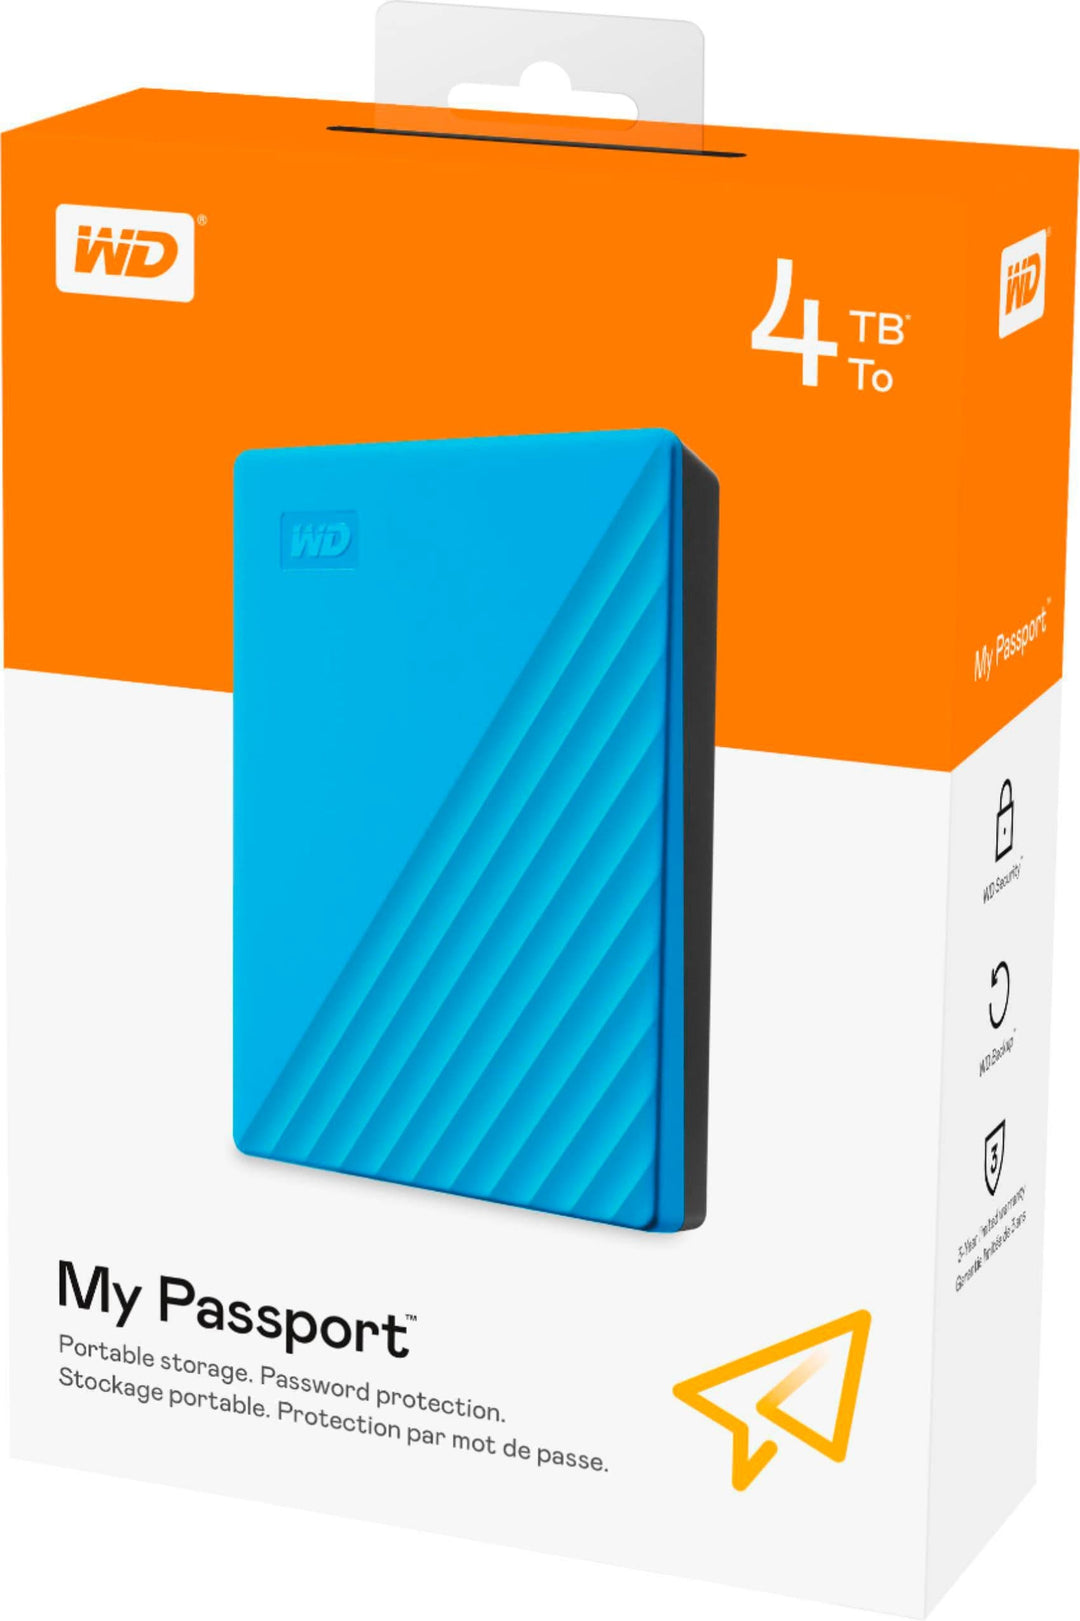 WD - My Passport 4TB External USB 3.0 Portable Hard Drive - Blue_5